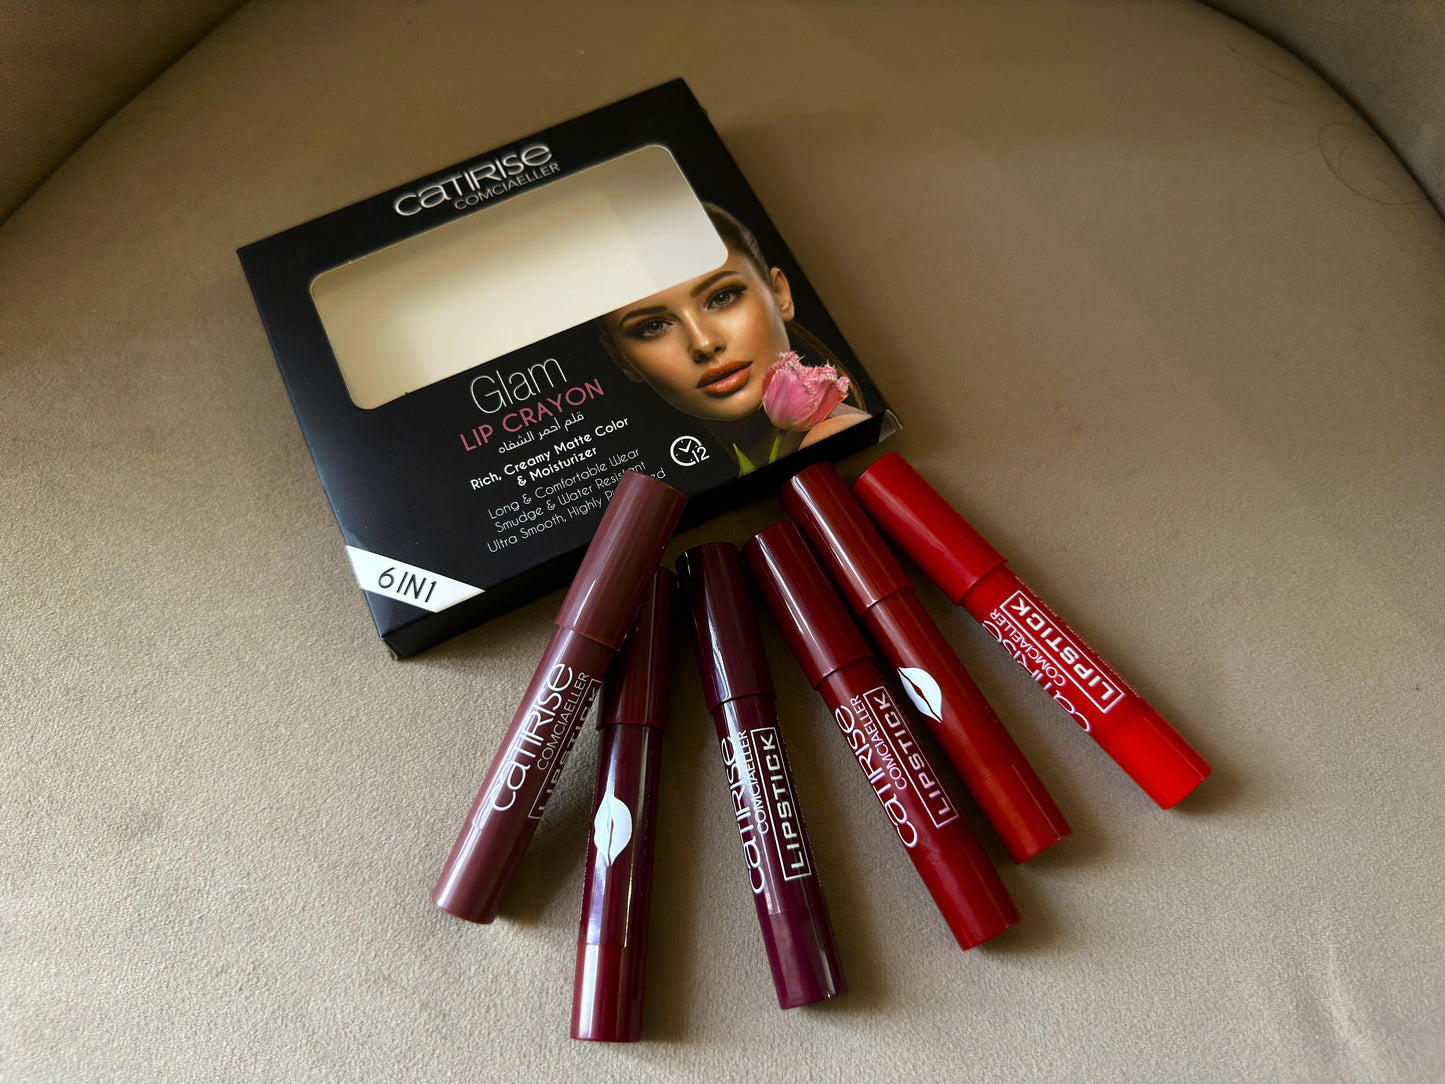 Catirise-comciaeller-Glam-lip crayon